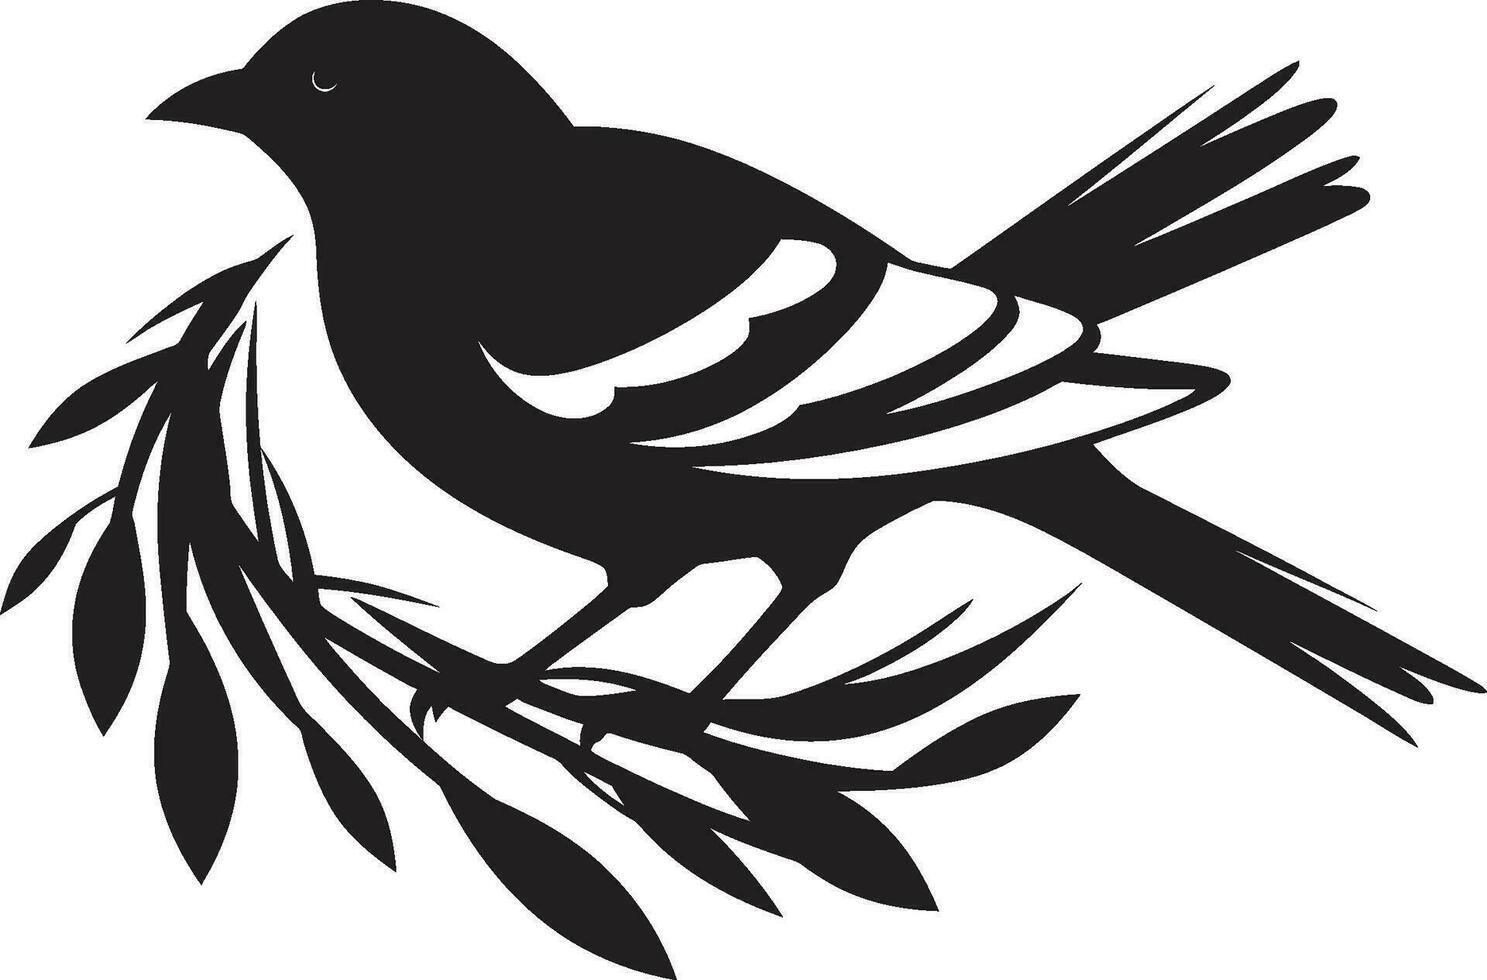 NestCraft Weaver Bird Icon Aerial Artistry Black Nest Emblem vector